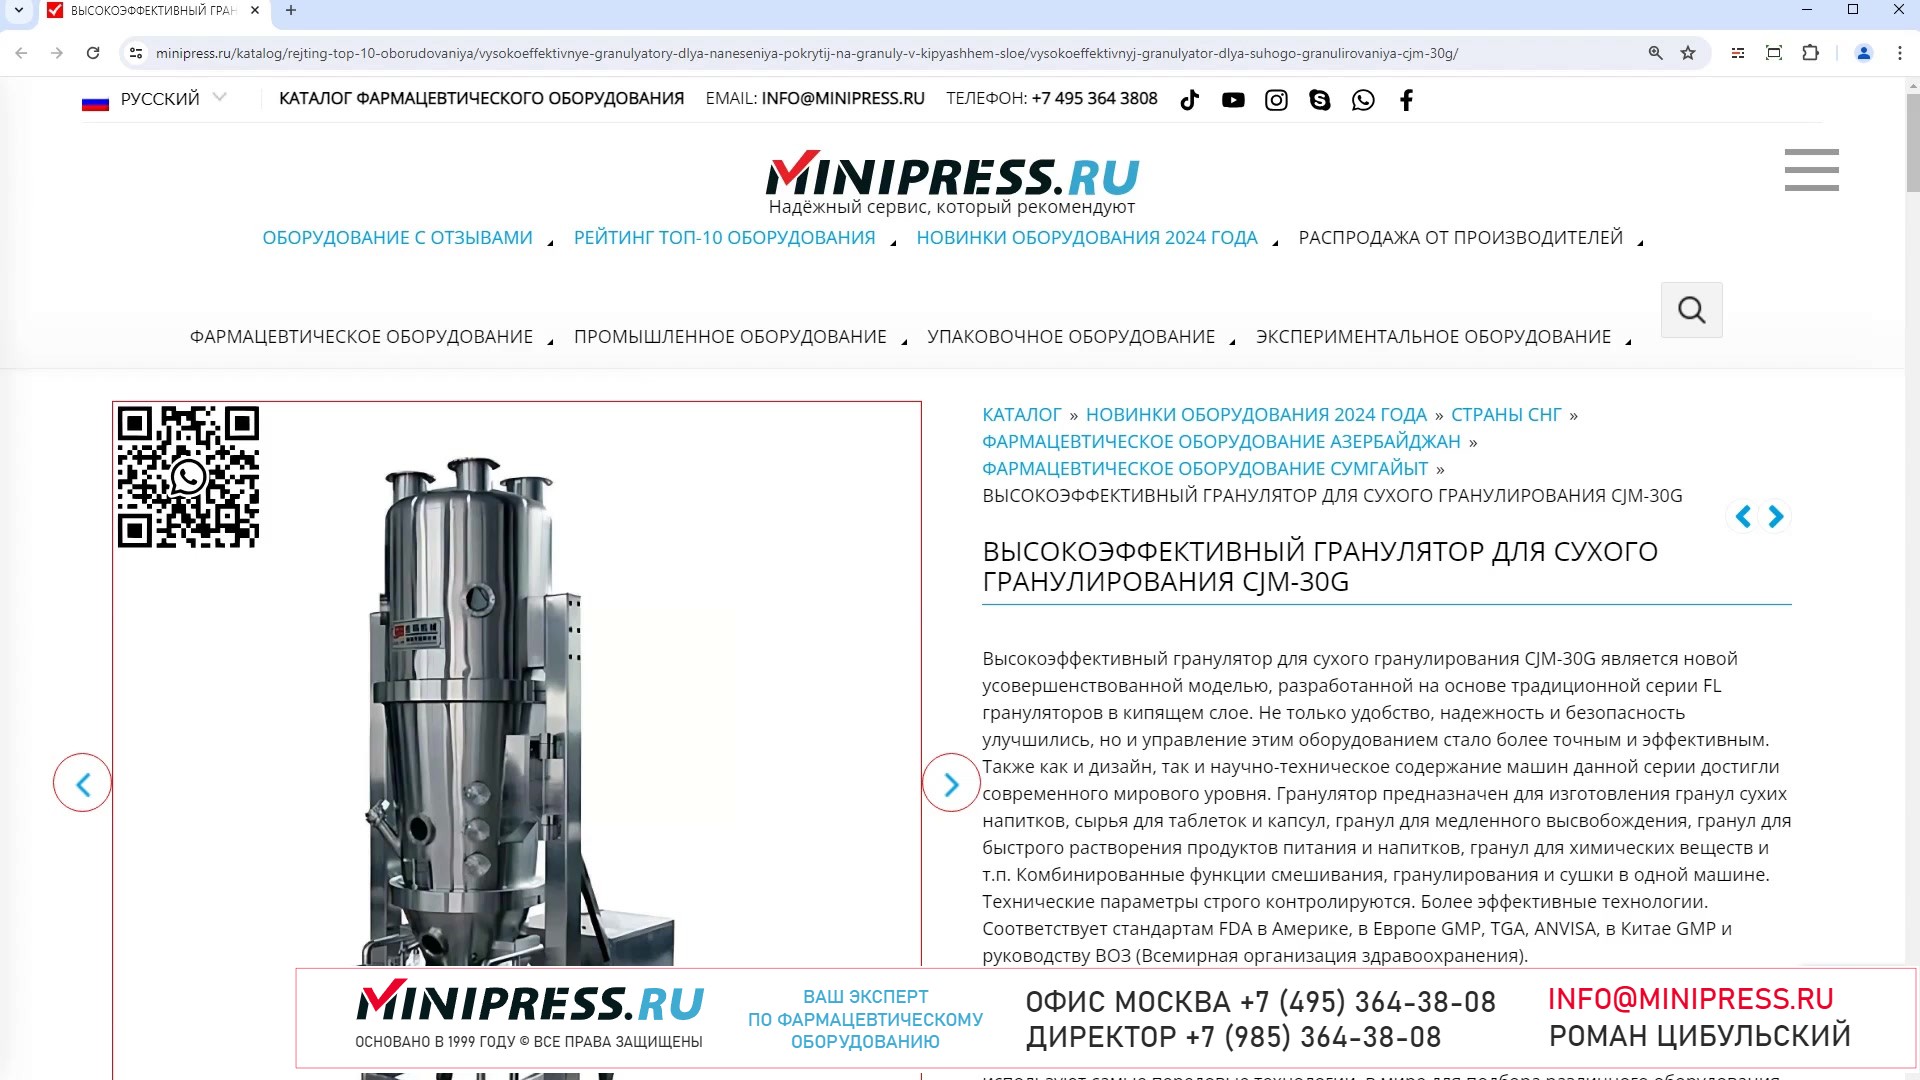 Minipress.ru Высокоэффективный гранулятор для сухого гранулирования CJM-30G